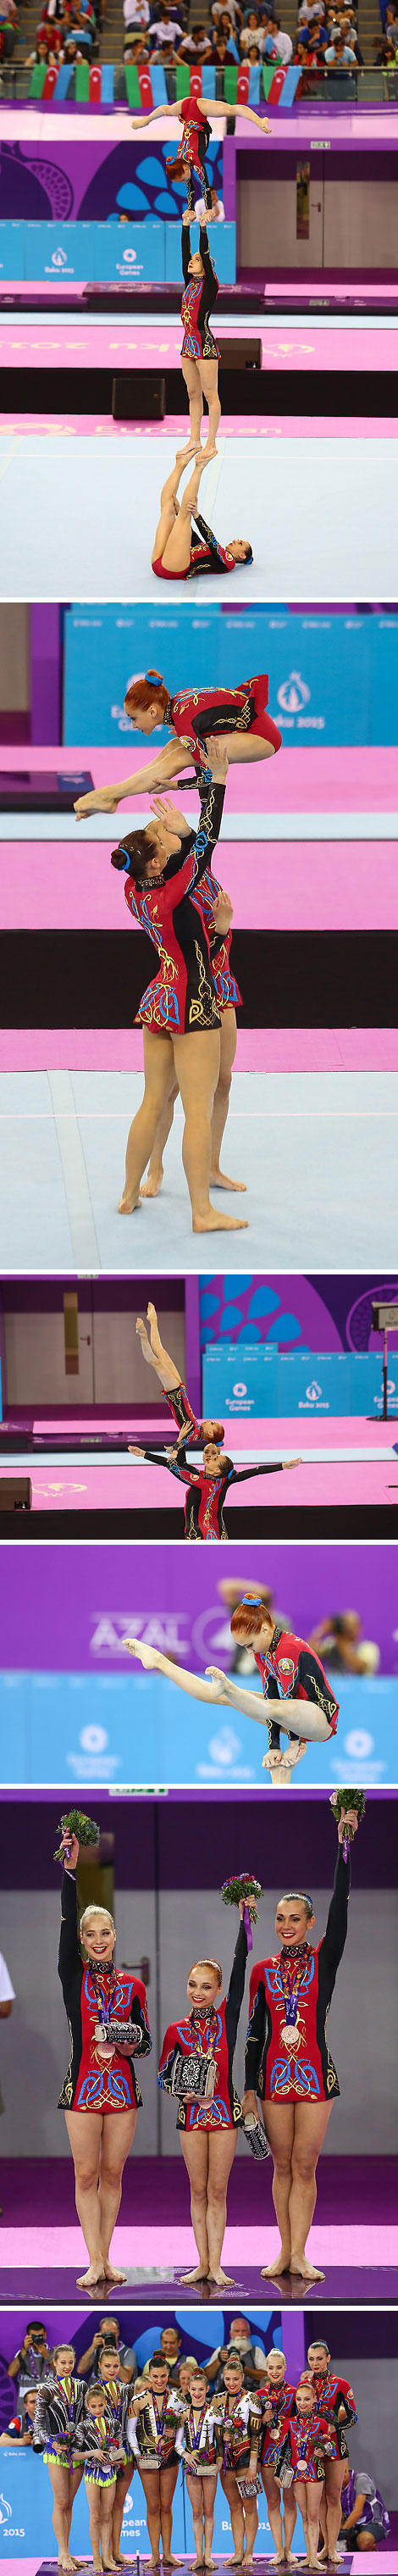 Belarus clinches acrobatic gymnastics bronze in Baku